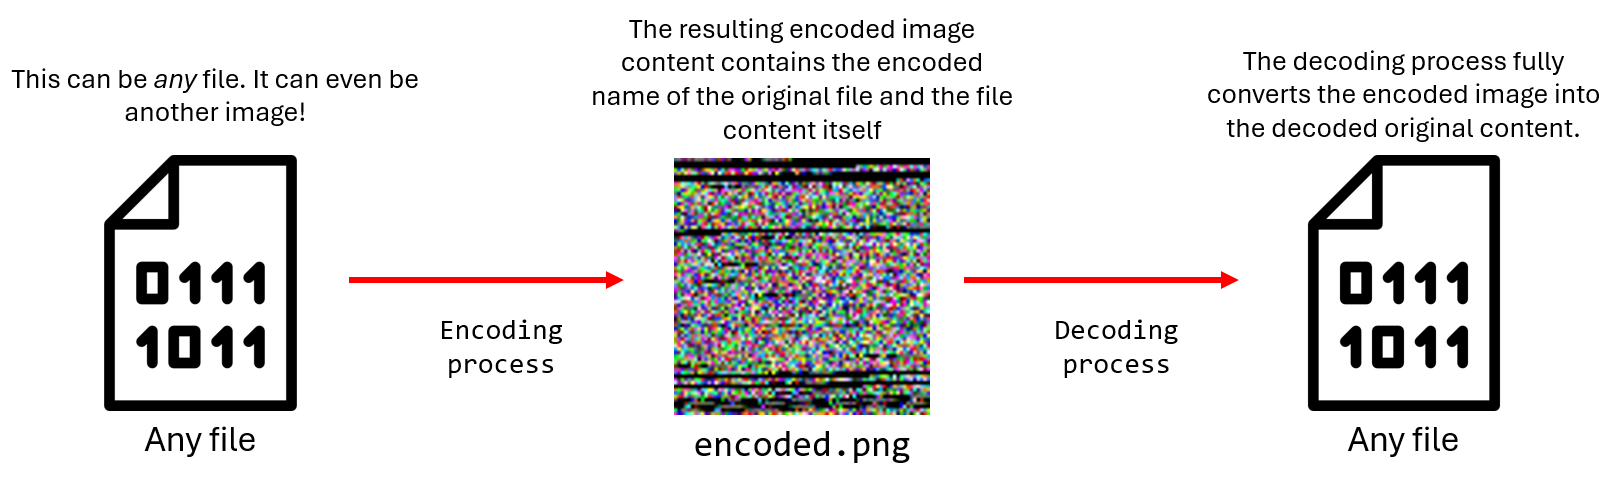 encoding decoding process